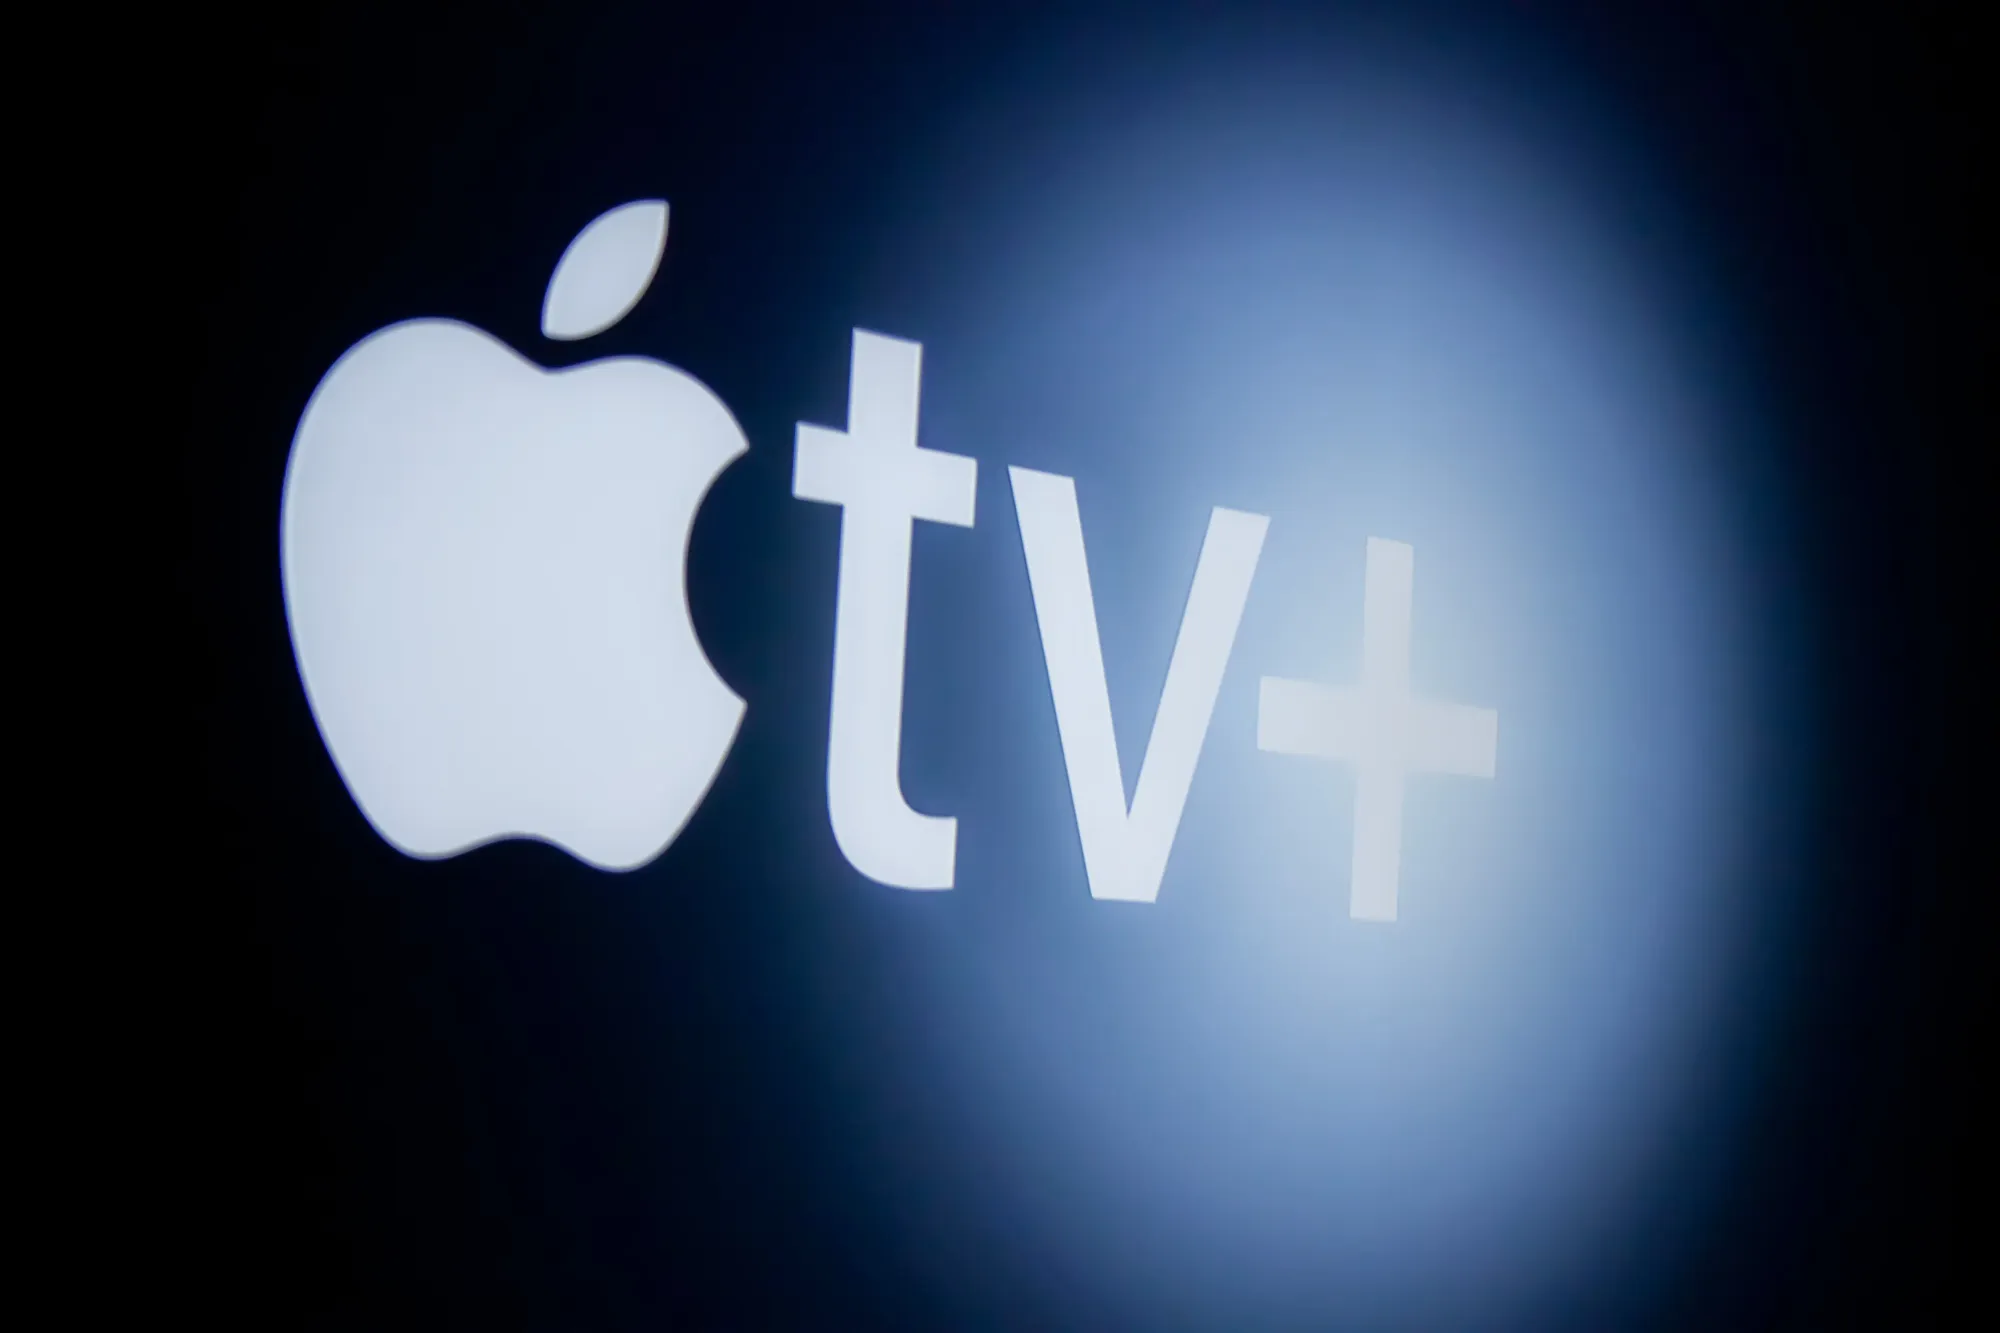 Logo de Apple TV+